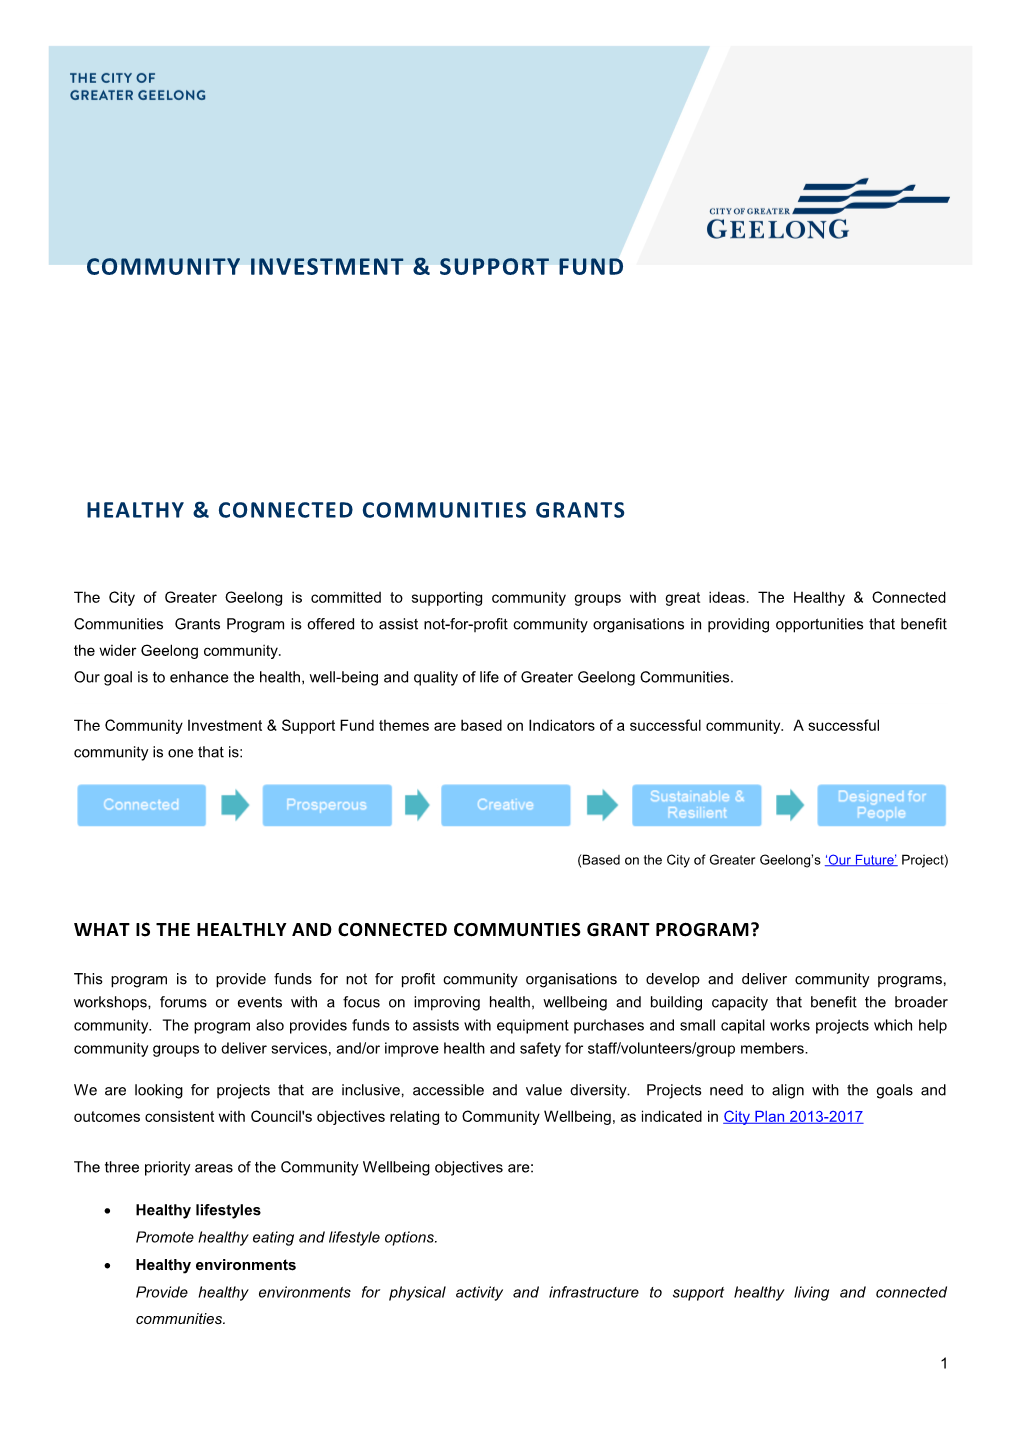 Healthy & Connected Communities Grants